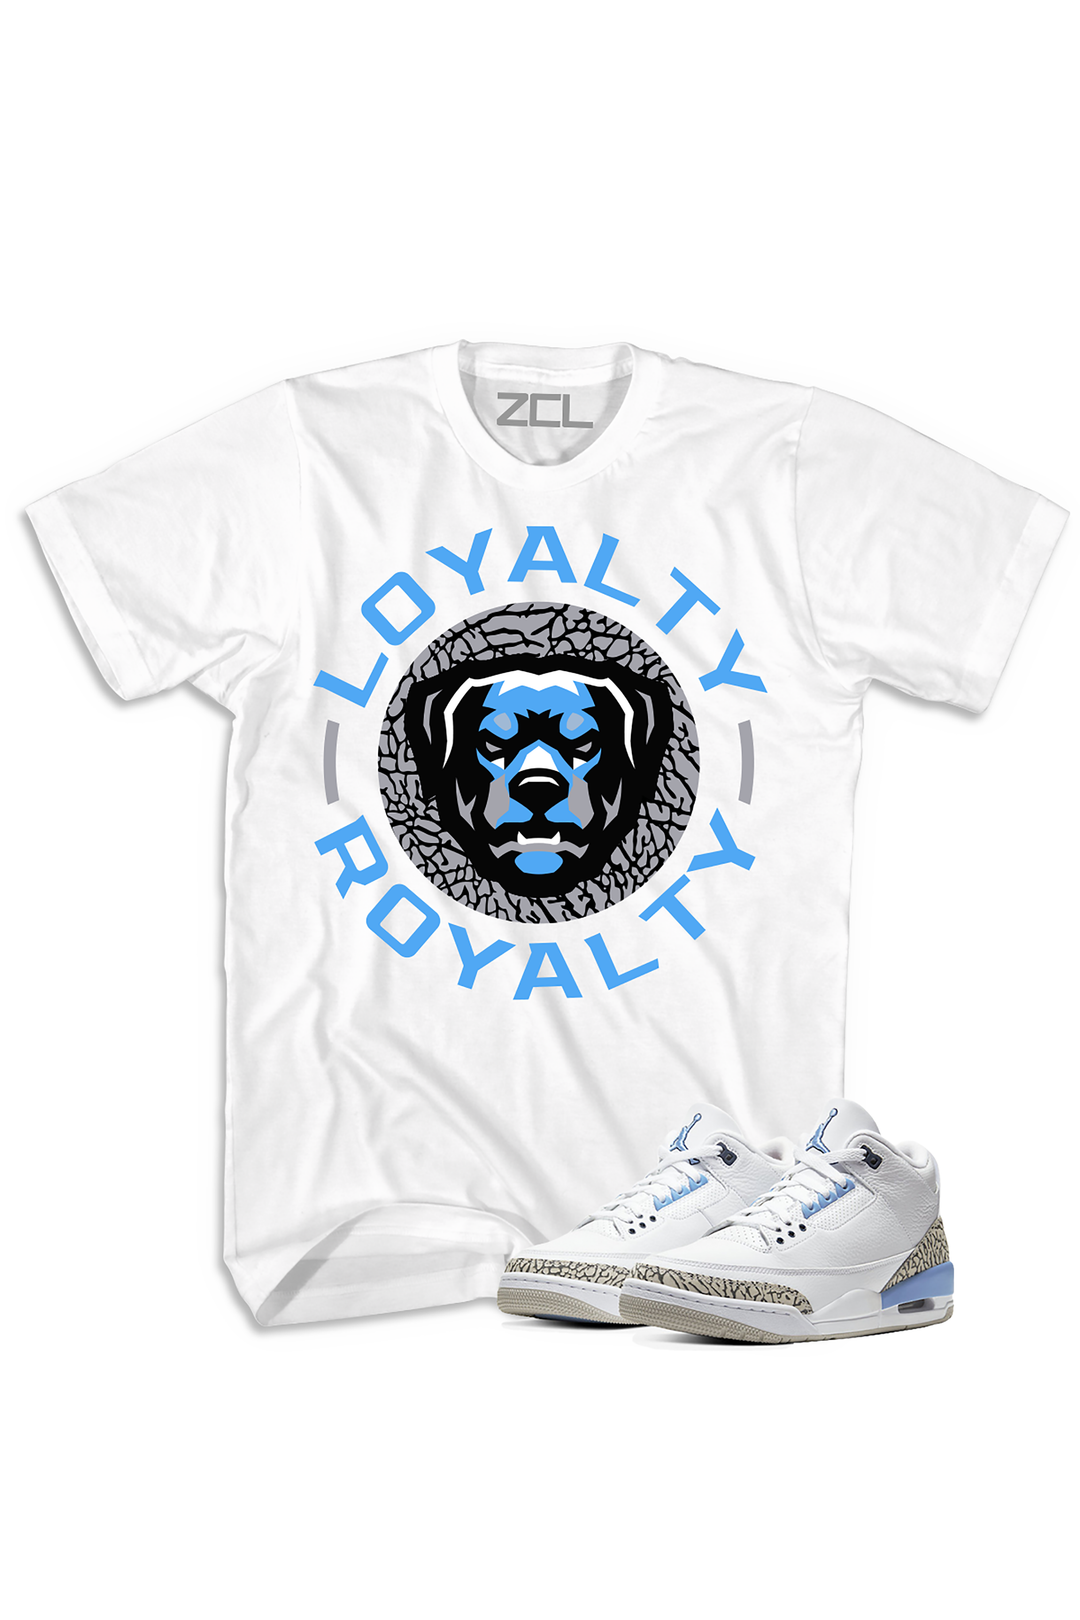 ZCL Loyalty-Royalty “UNC” Jordan 3 HookUp Tee White - Zamage